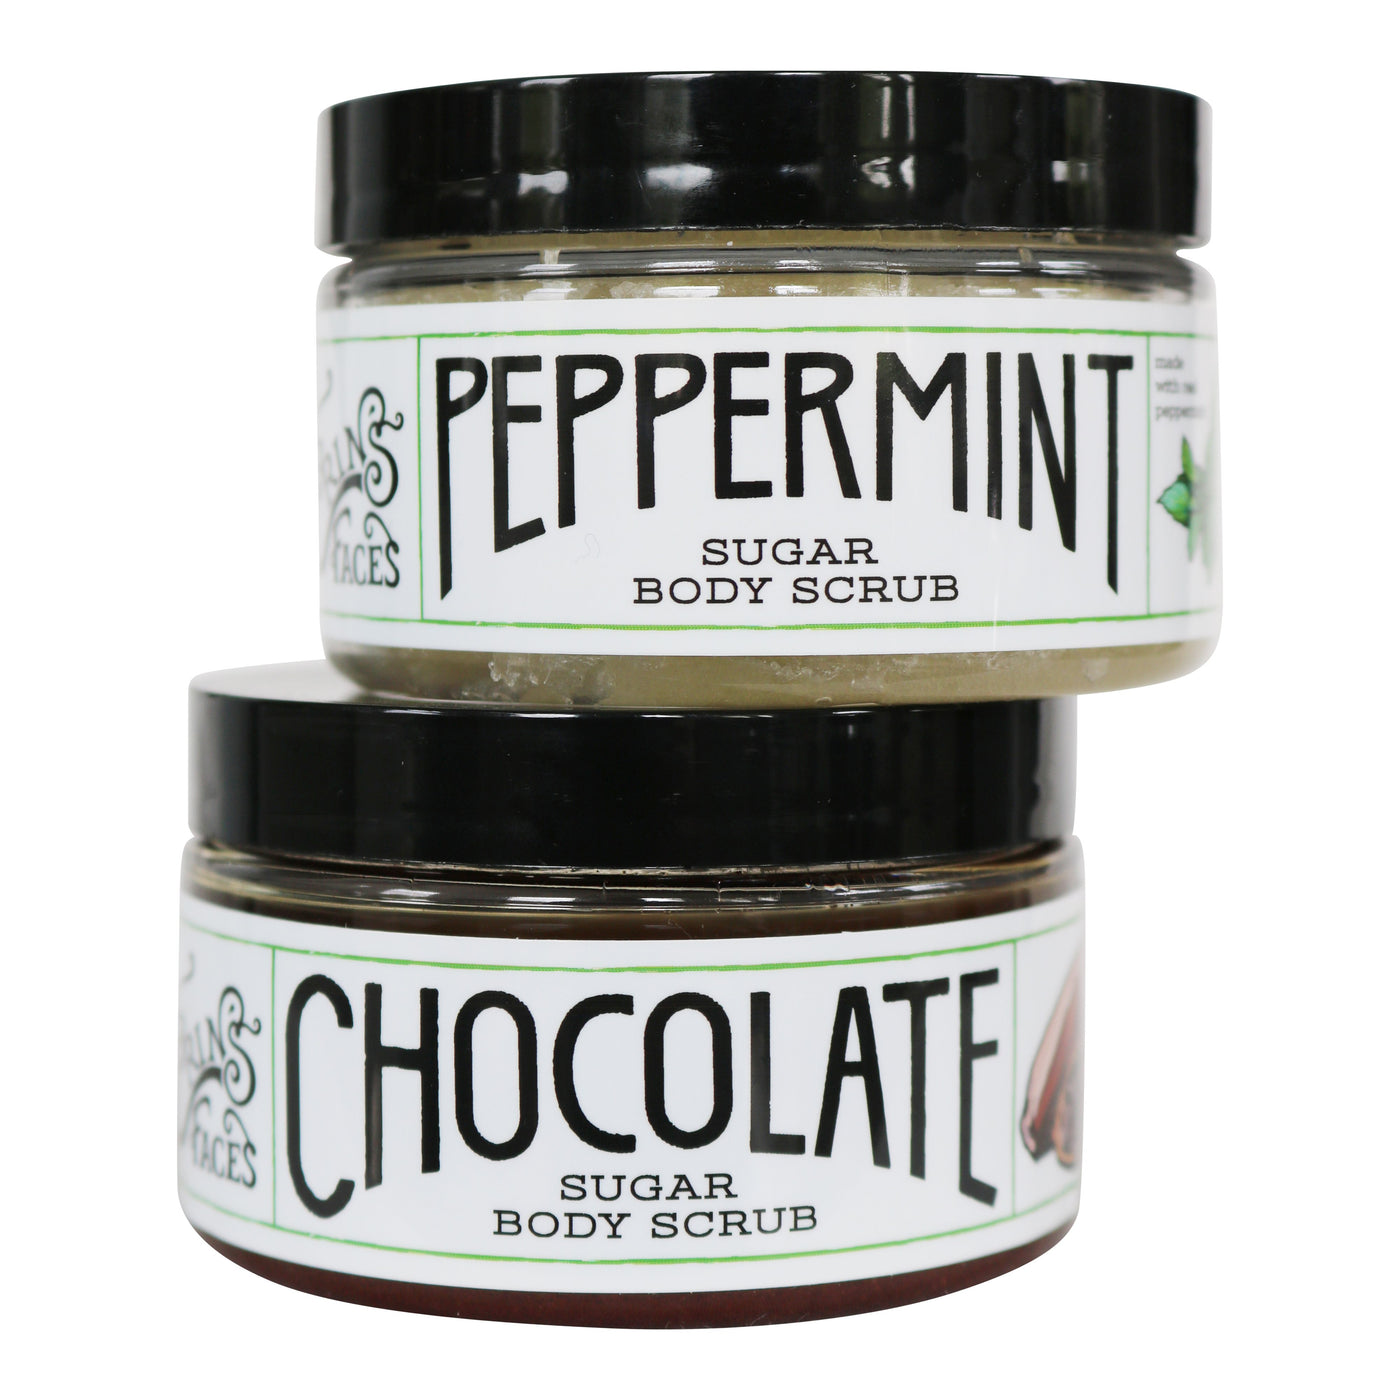 The peppermint sugar body scrub and chocolate sugar body scrub in 4oz closer containers